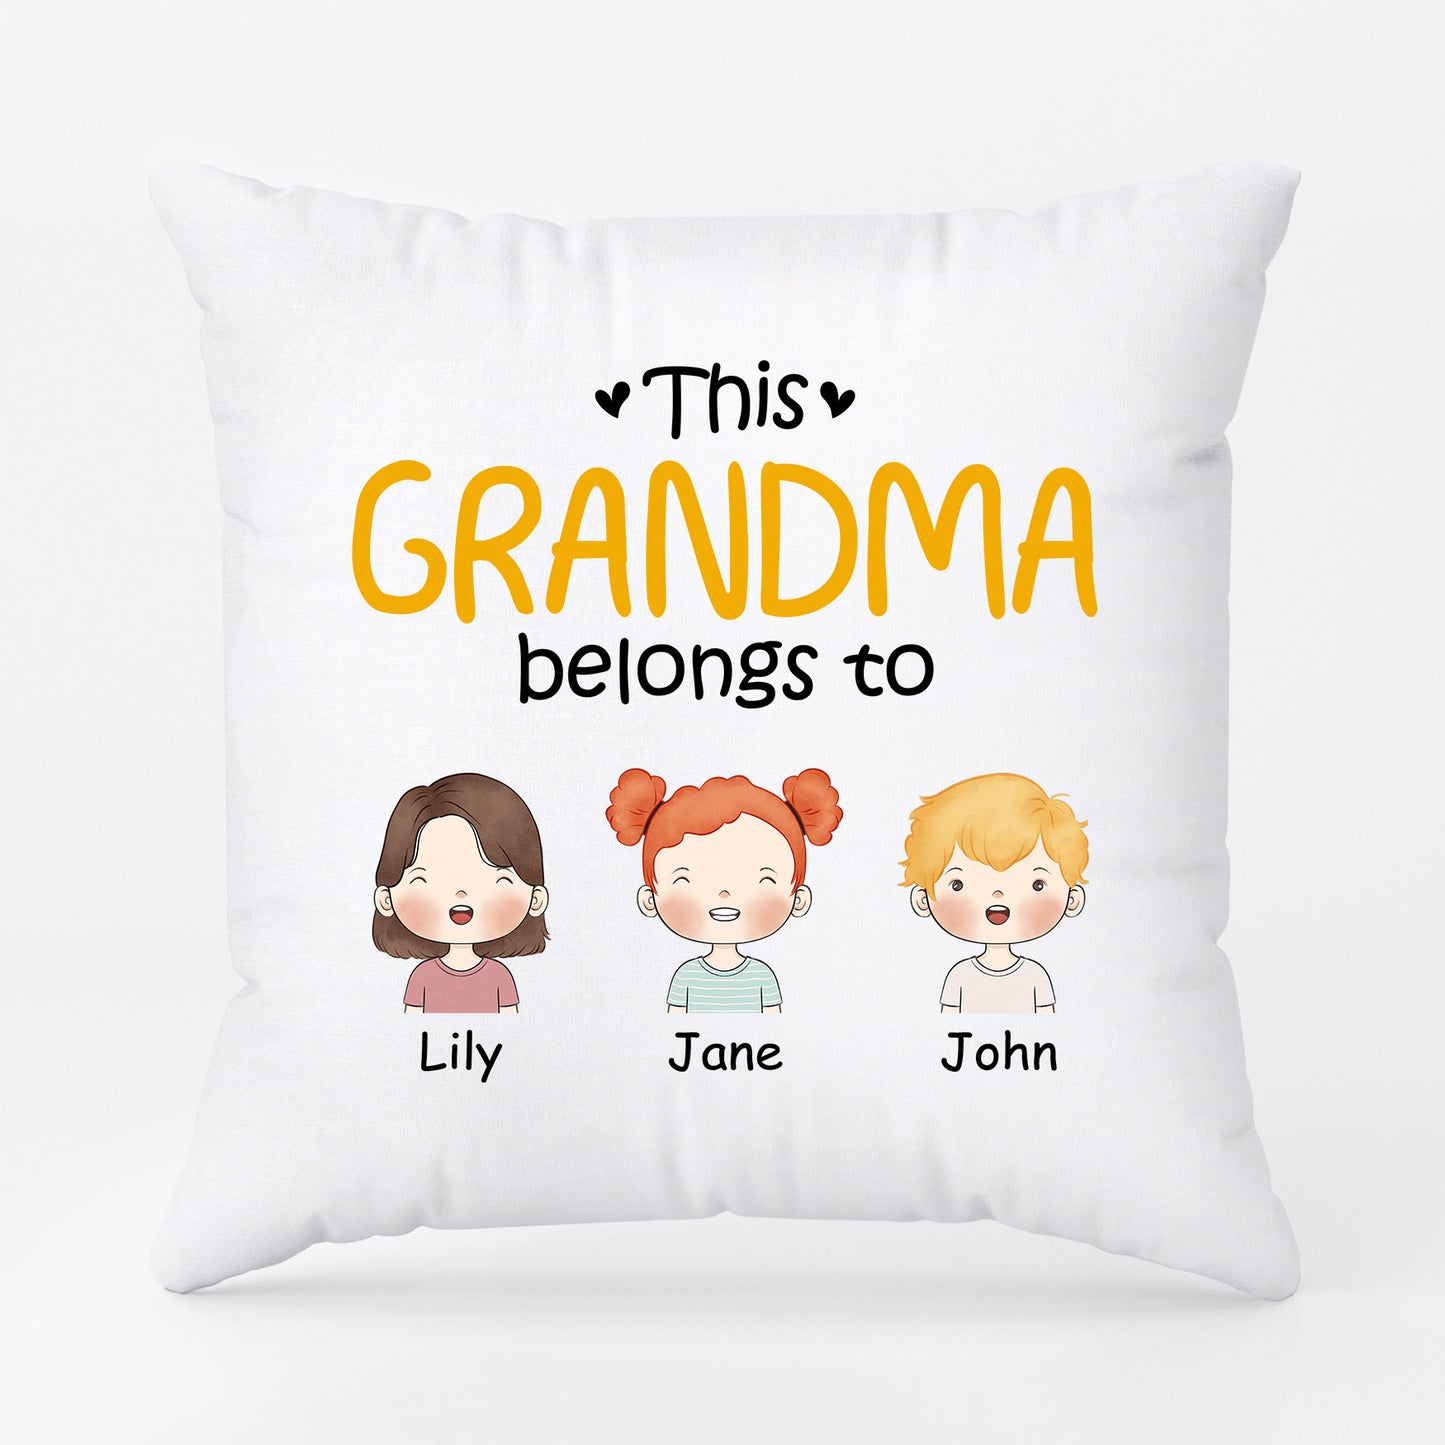 This Mummy/Grandma Belongs To - Personalised Gifts | Pillows for Grandma/Mum